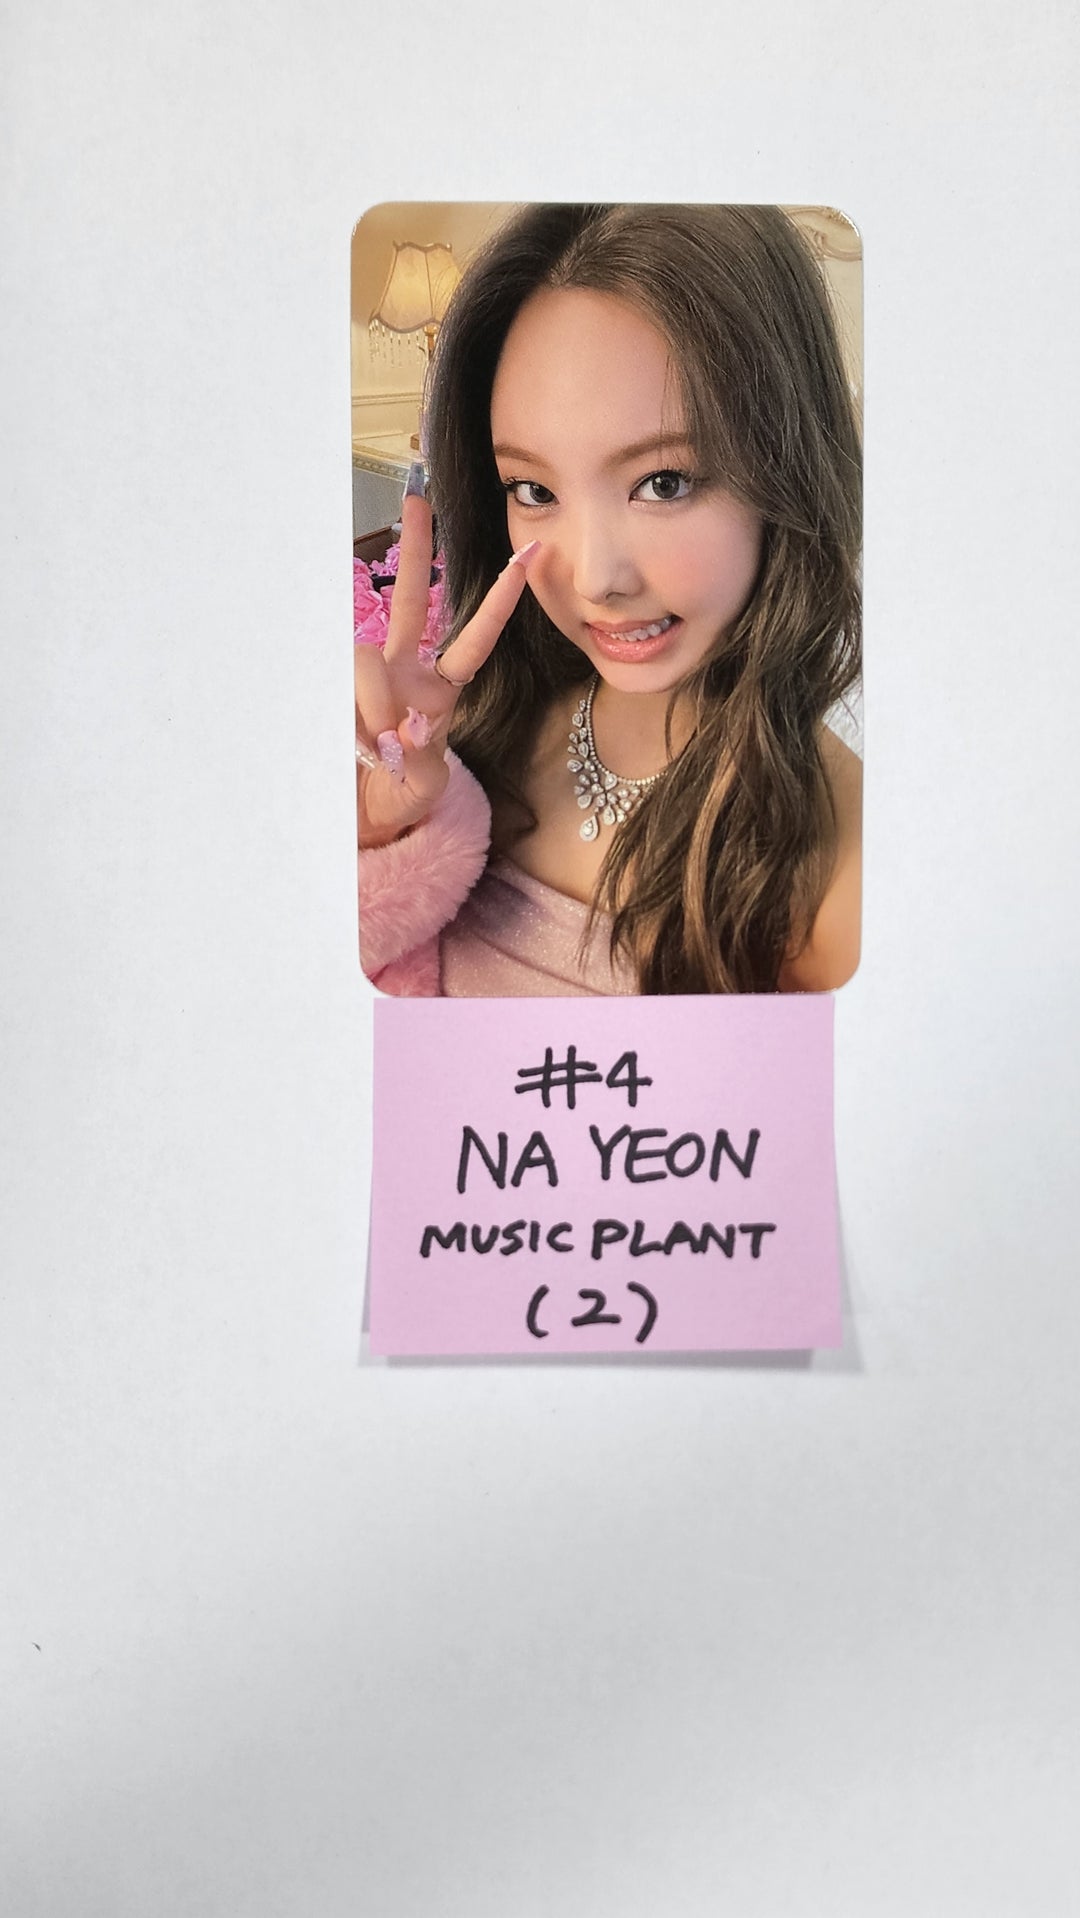 Nayeon "IM NAYEON" - Music Plant Lucky Draw Event Photocard, 2 Cut Photo